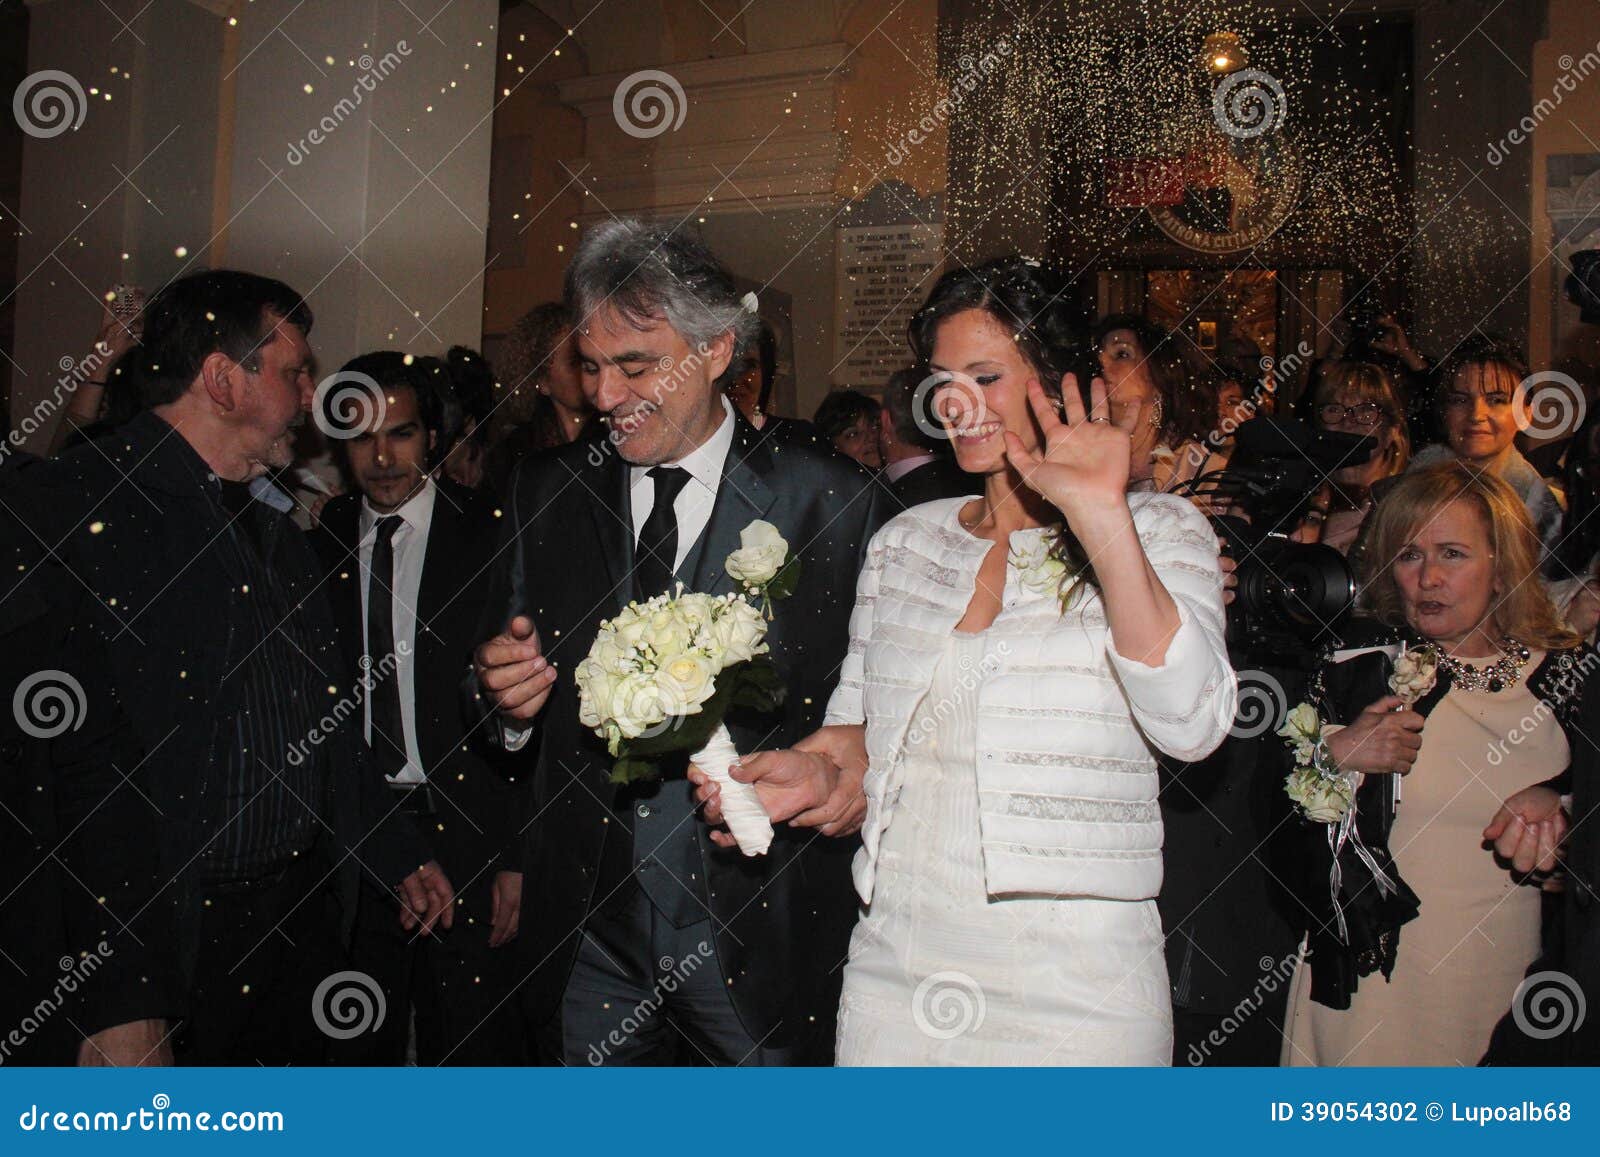 Bocelli marries Veronica Berti